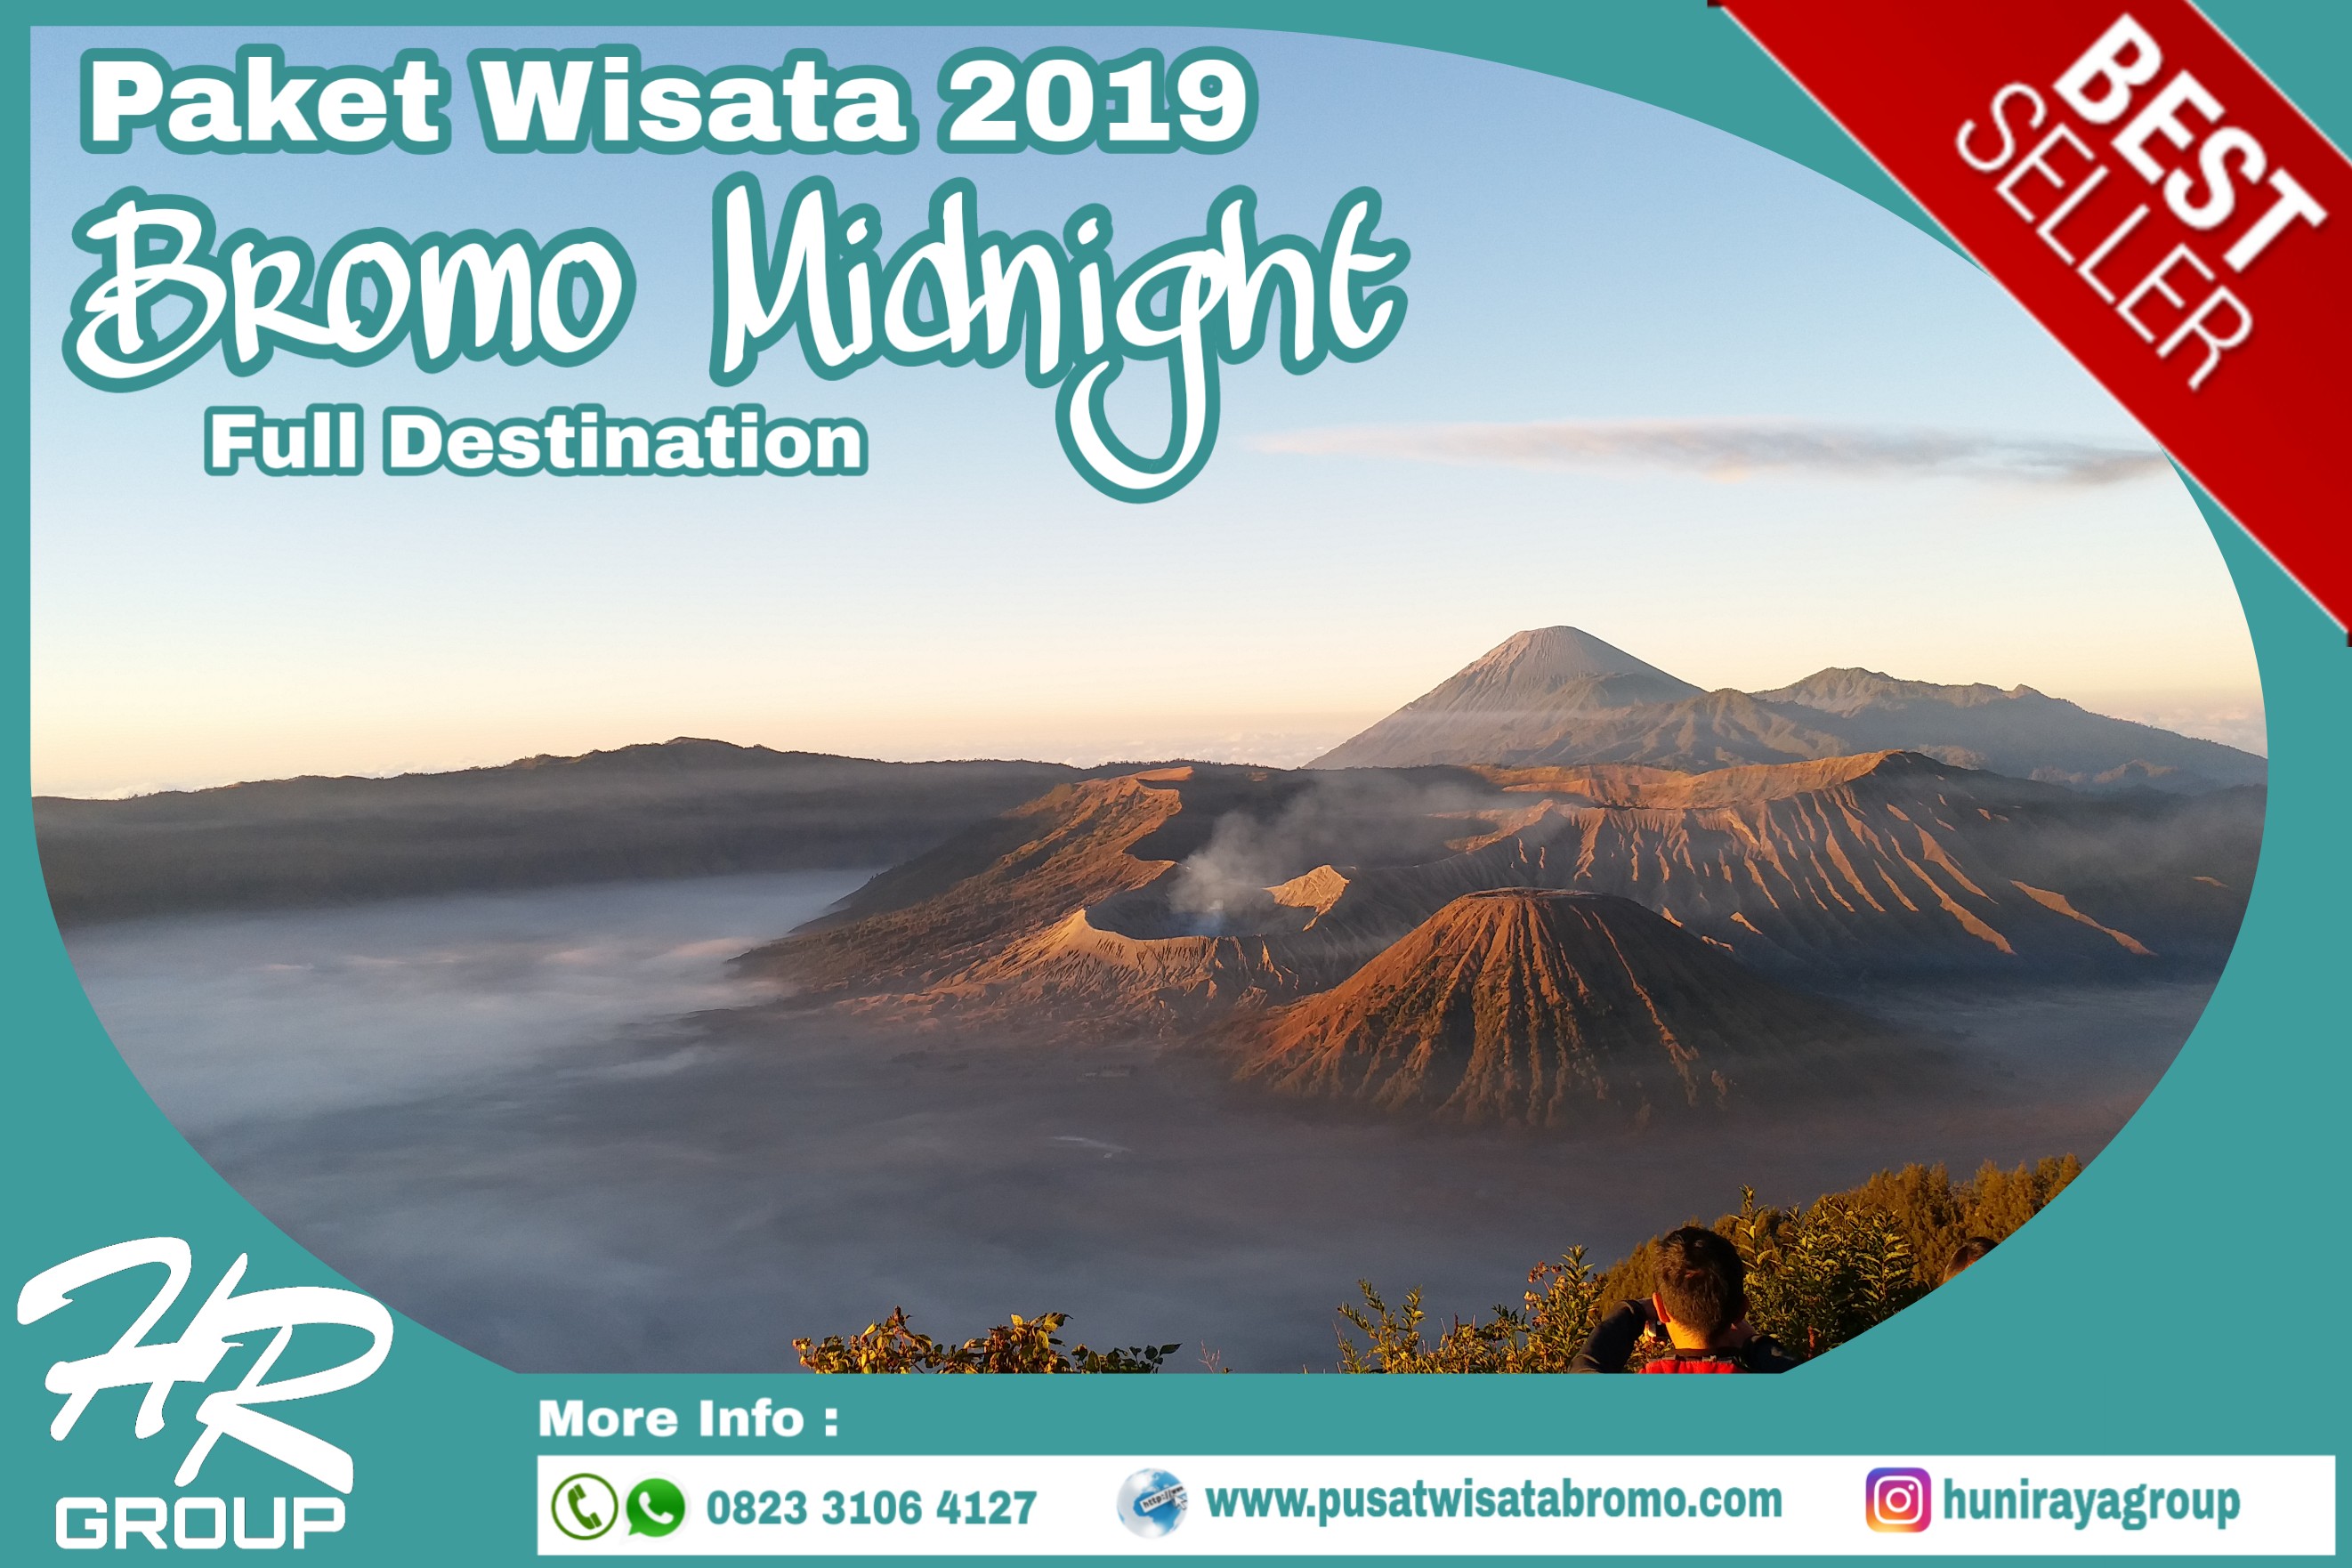 Paket Wisata Bromo Midnight Tour 2019 Murah | PusatWisataBromo.com By Huni Raya Group